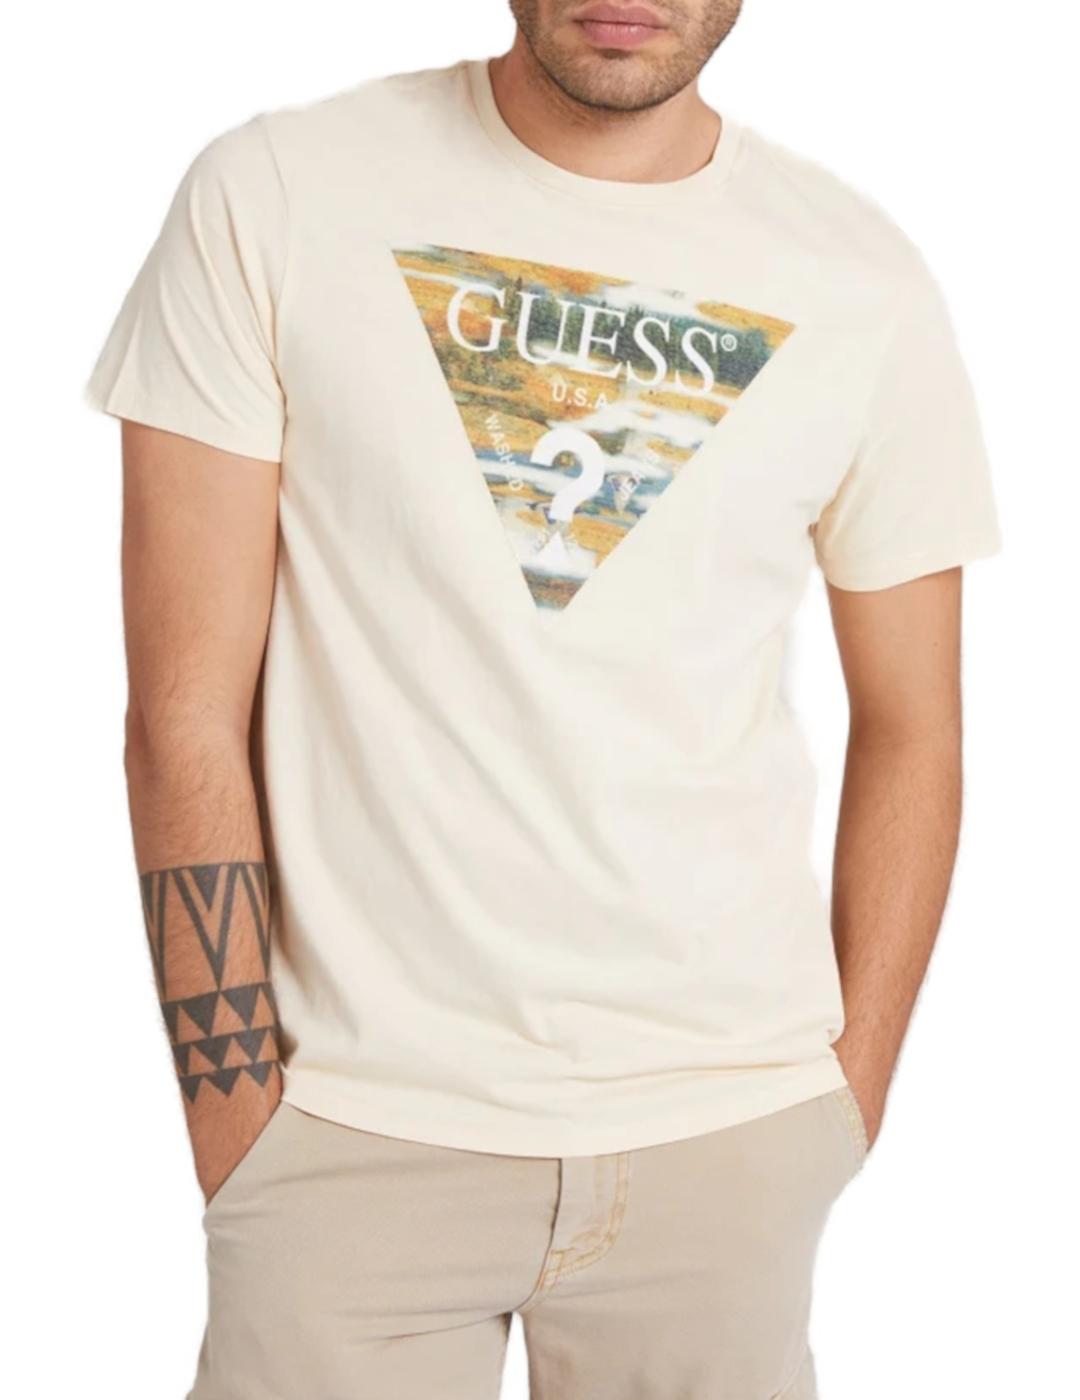 Camiseta Guess triangulo beige para hombre-z